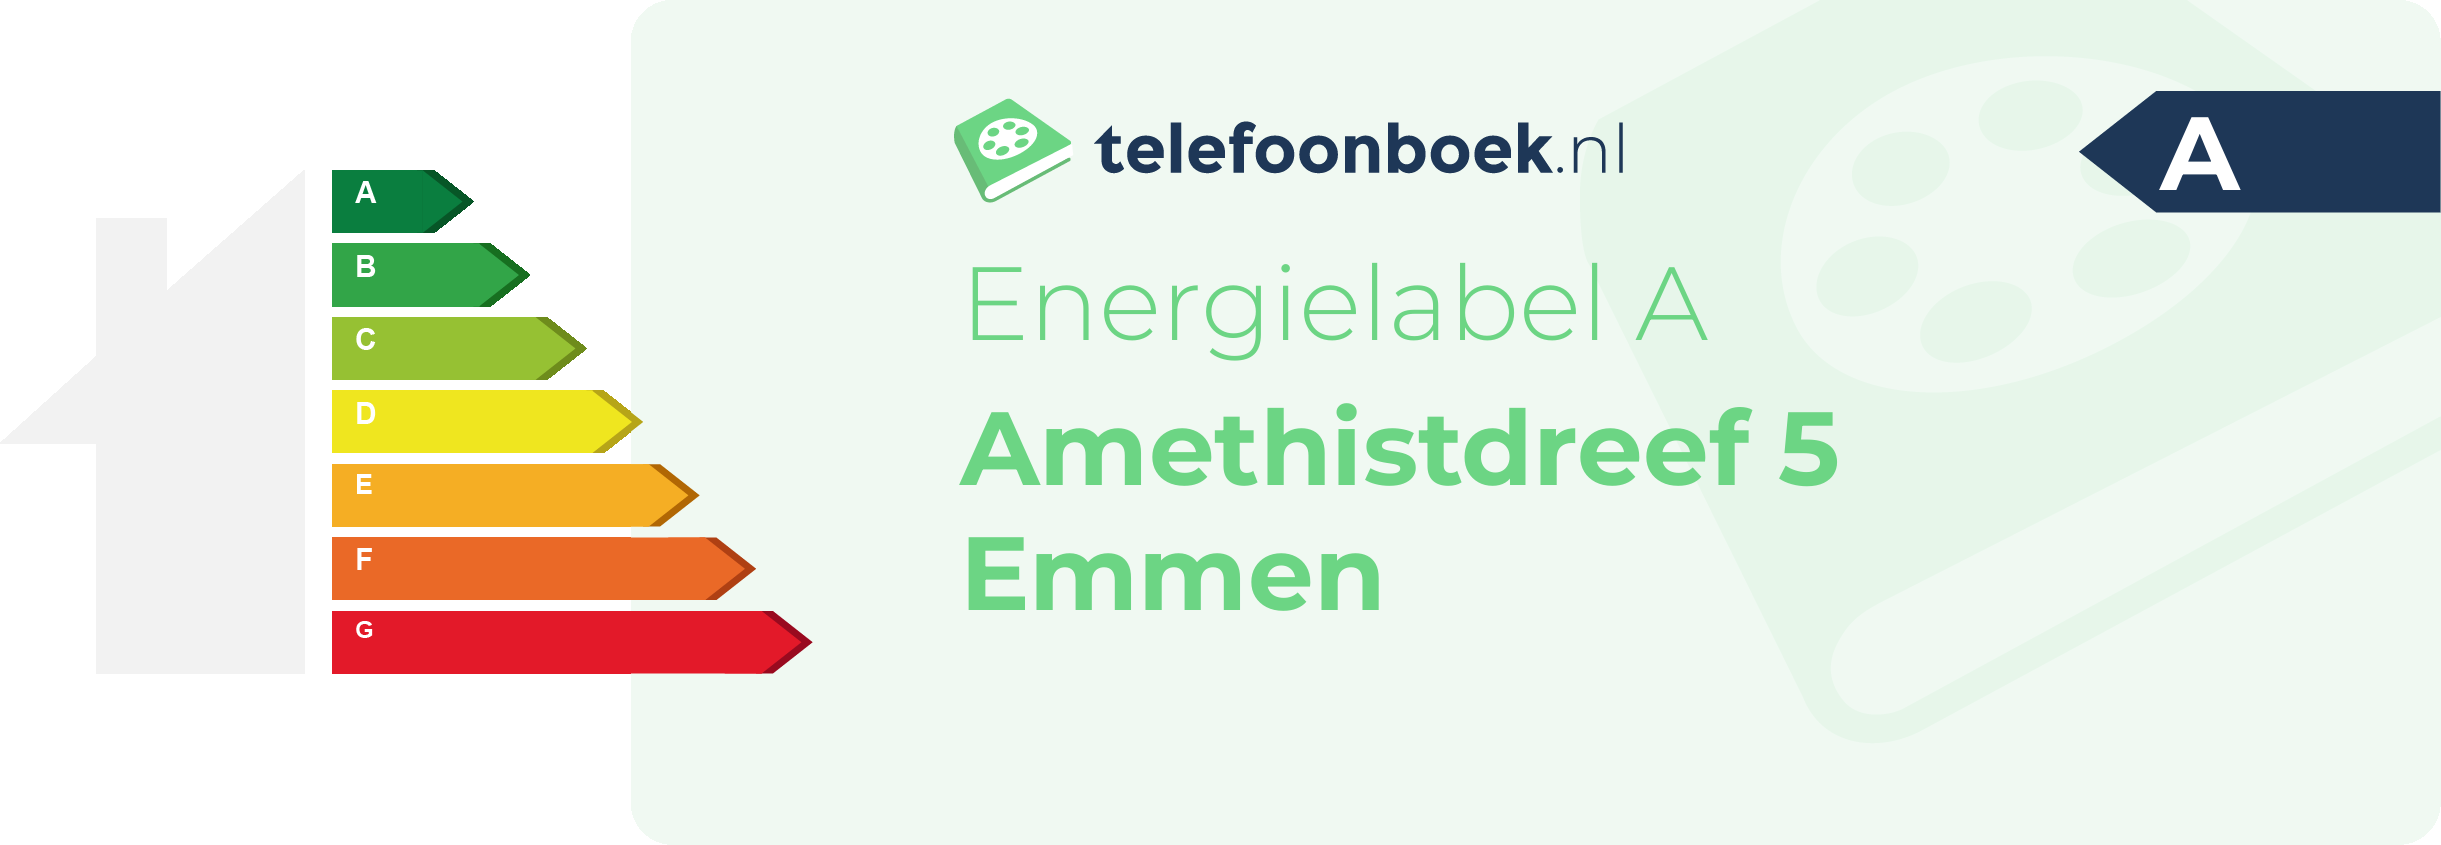 Energielabel Amethistdreef 5 Emmen